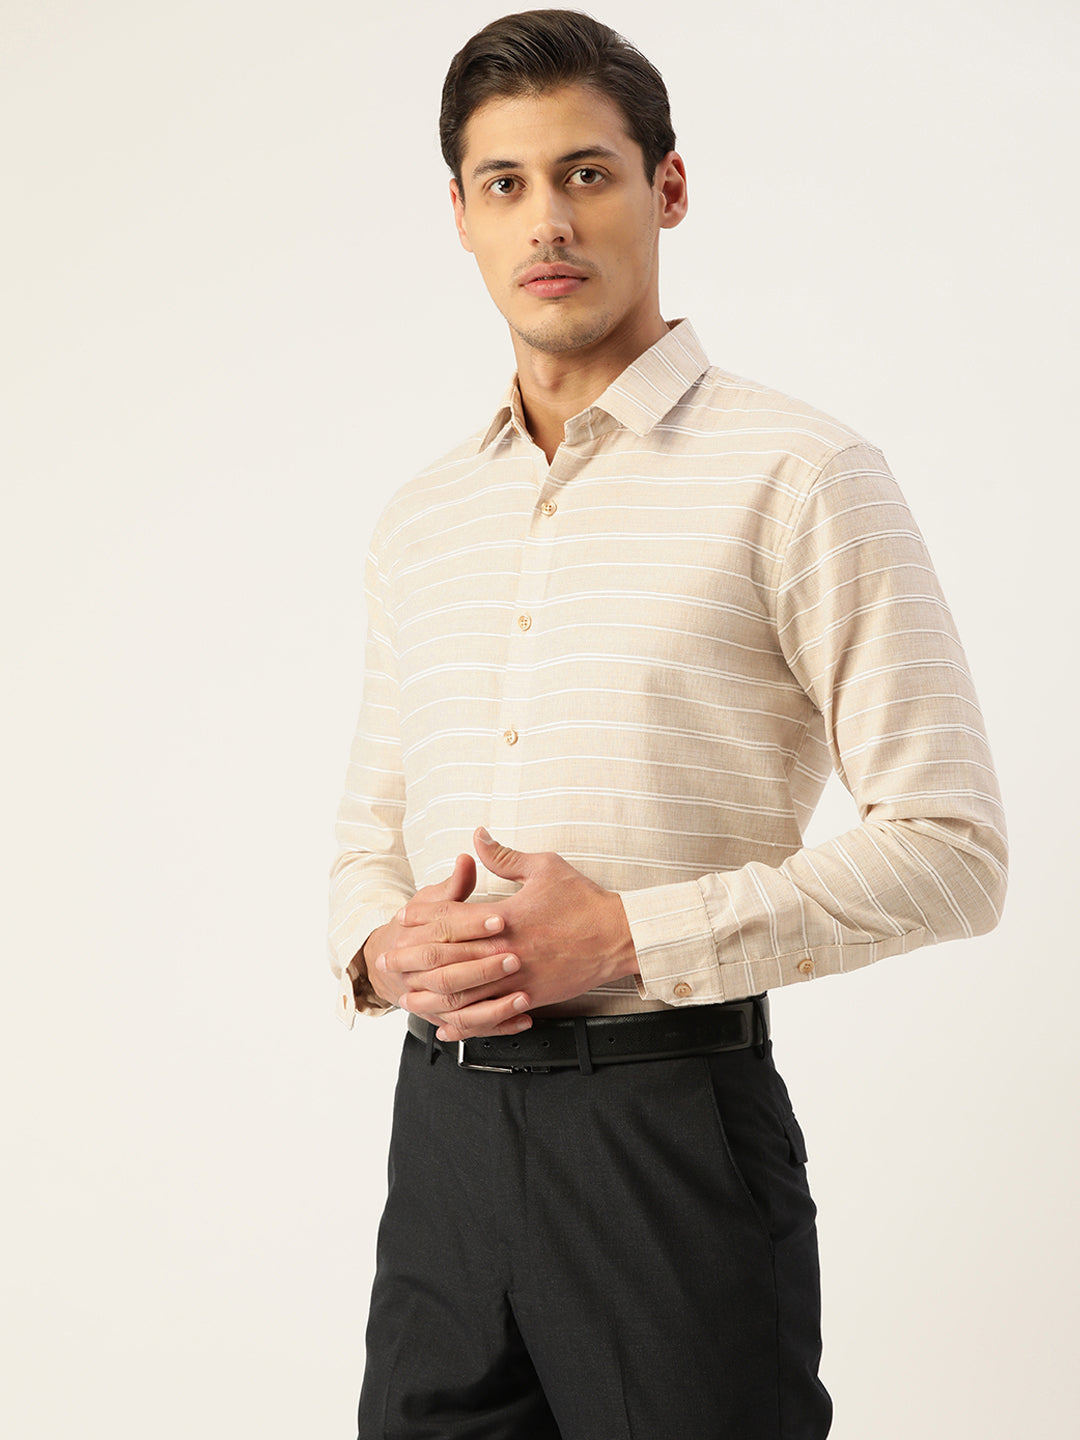 Men's Cotton Striped Formal Shirts ( SF 799Cream ) - Jainish